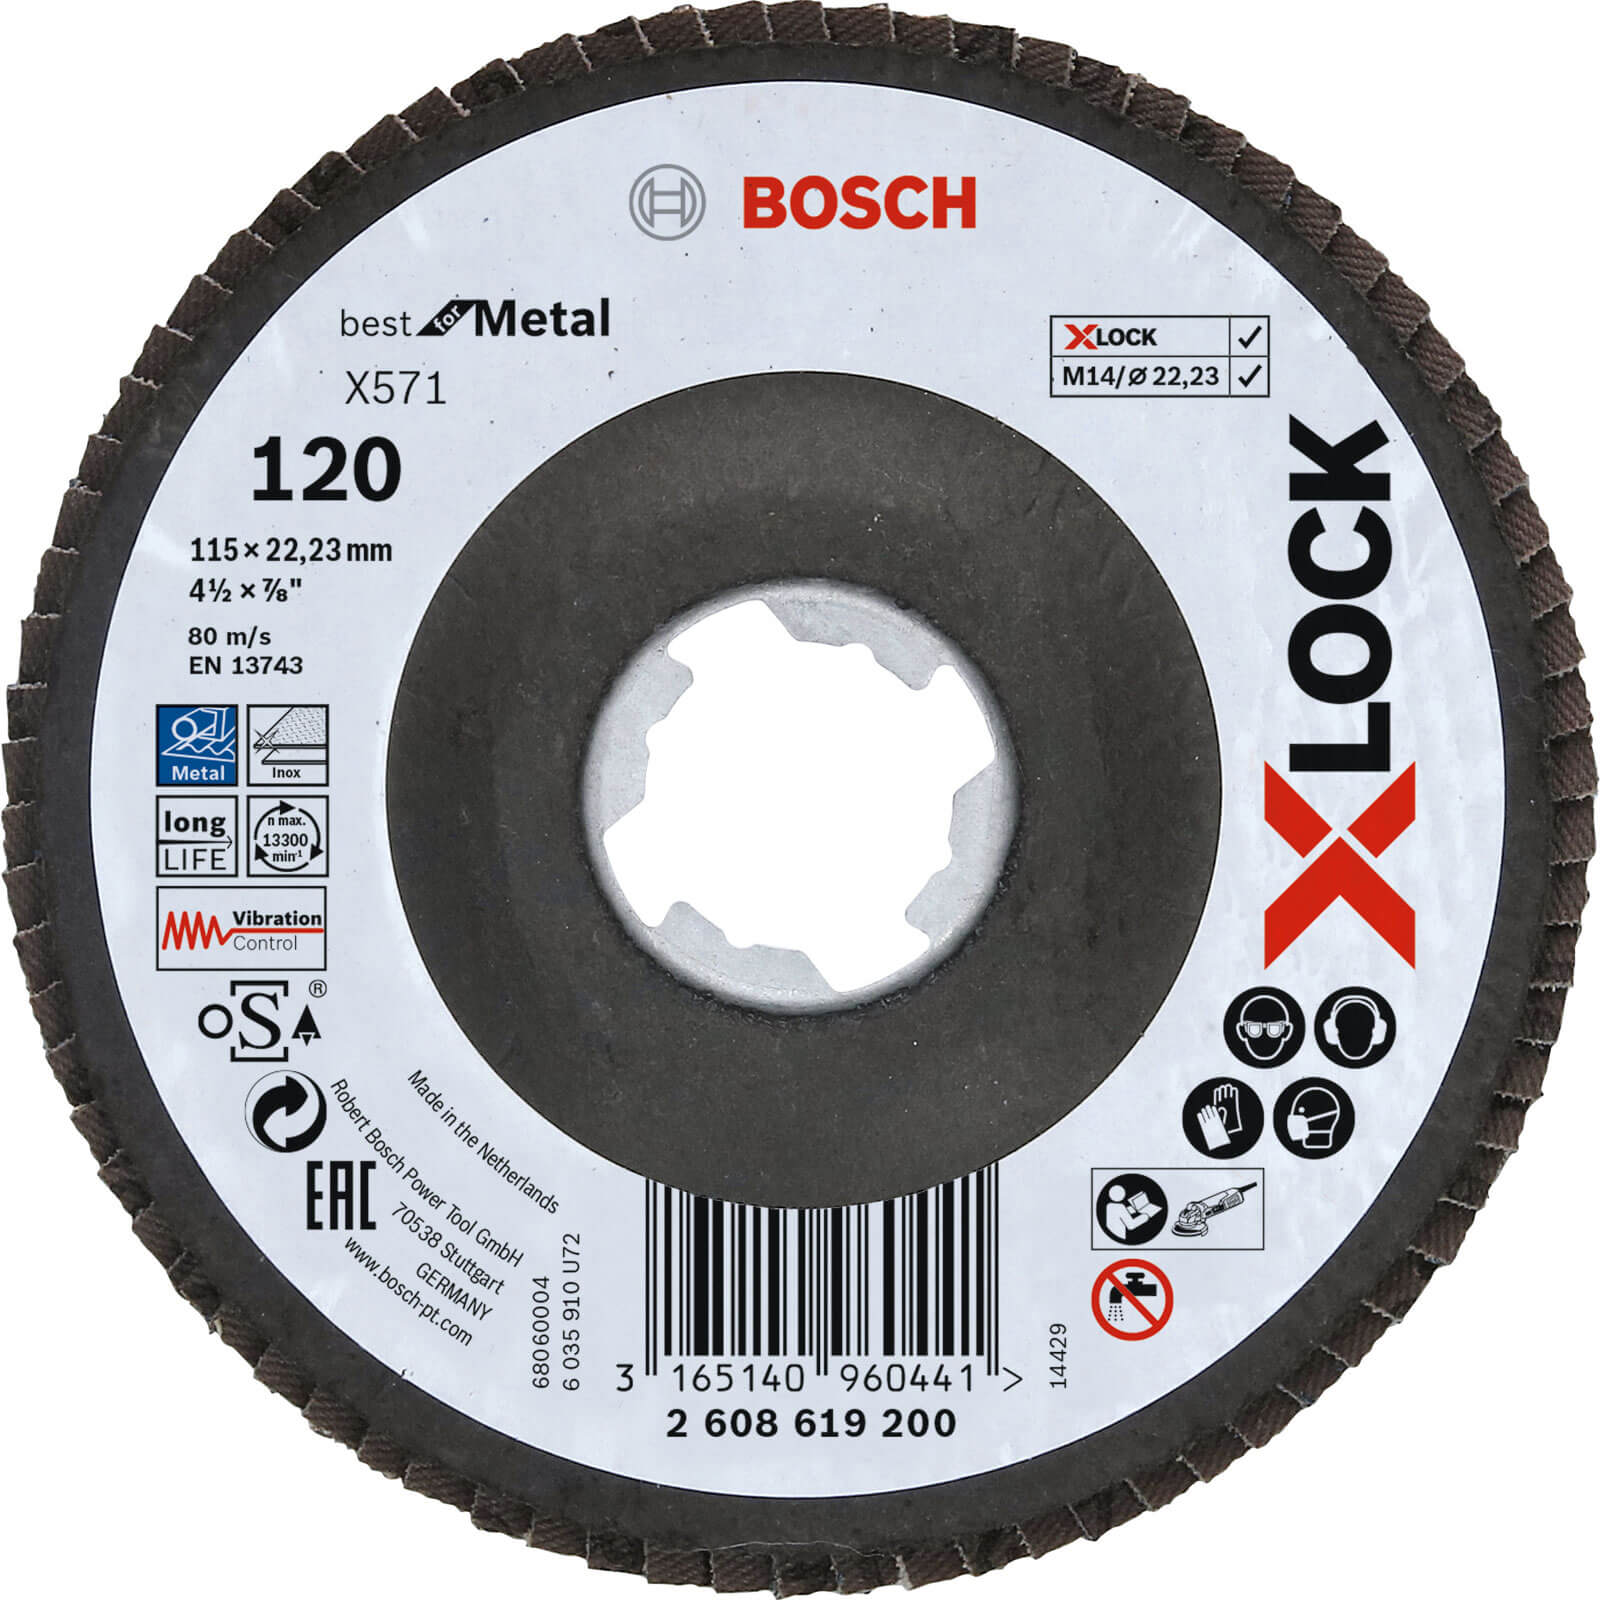 Photo of Bosch X Lock Zirconium Abrasive Flap Disc 115mm 120g Pack Of 1